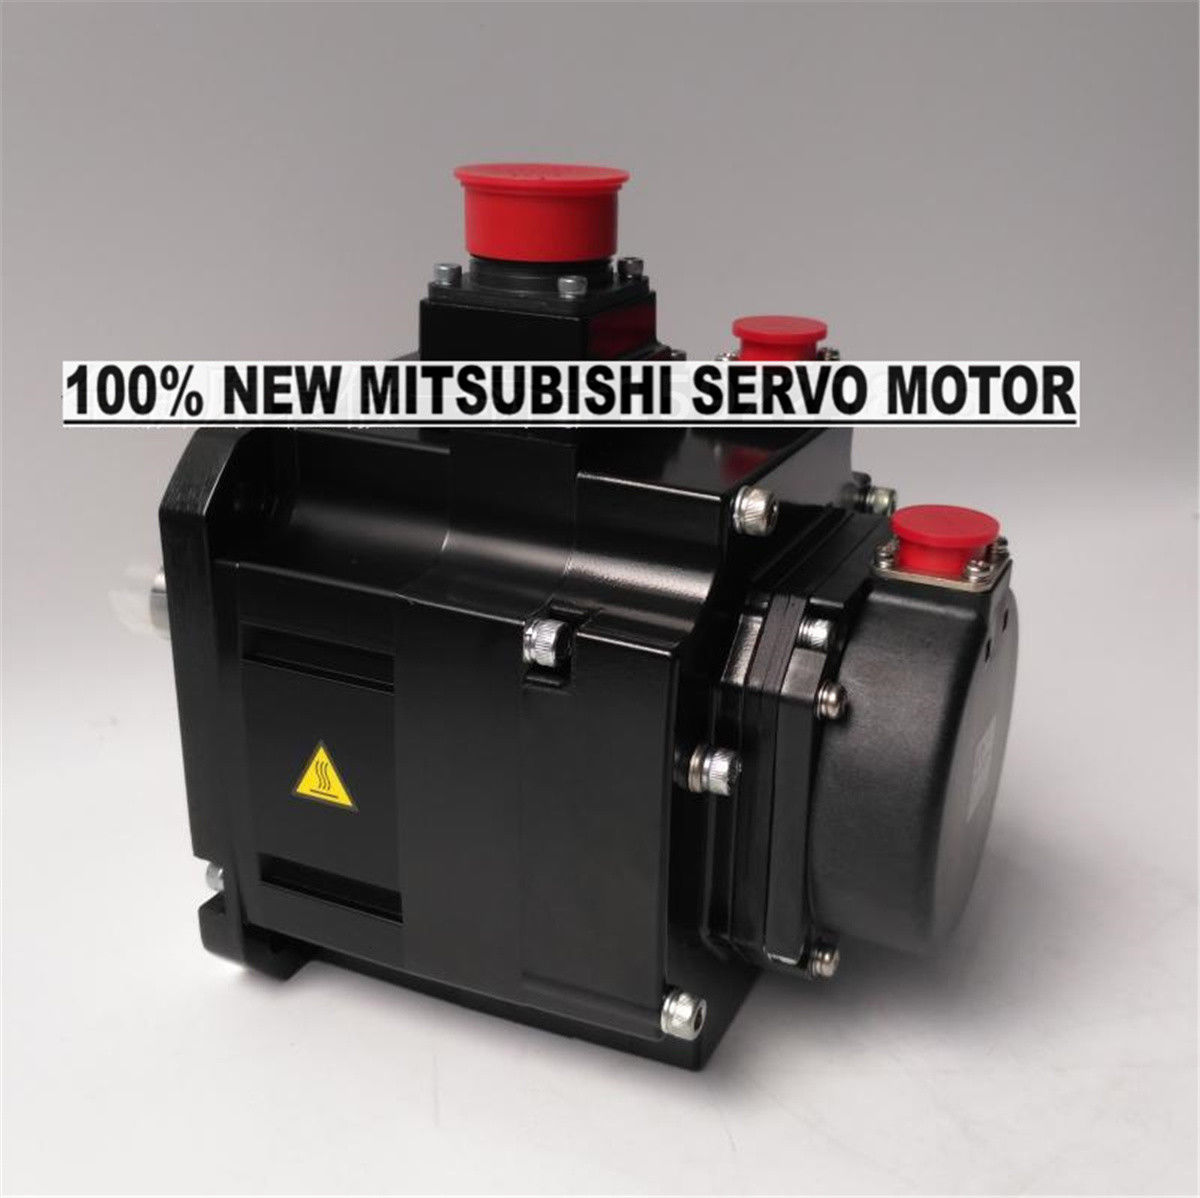 Brand NEW Mitsubishi Servo Motor HF-SP52 in box HFSP52 - Click Image to Close